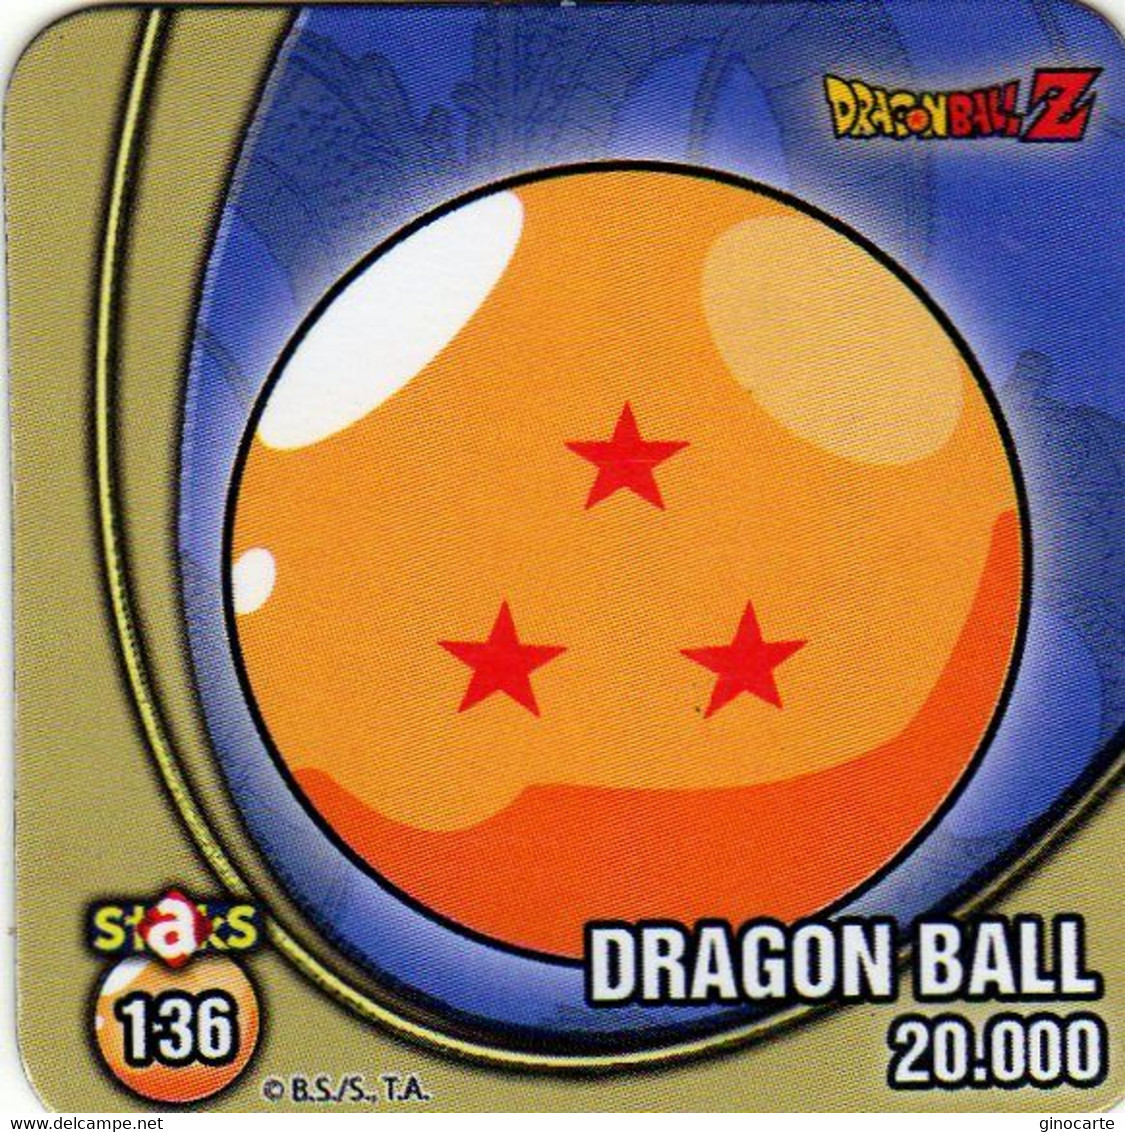 Magnets Magnet Stacks Dragon Ball Dragonball 136 - Personen